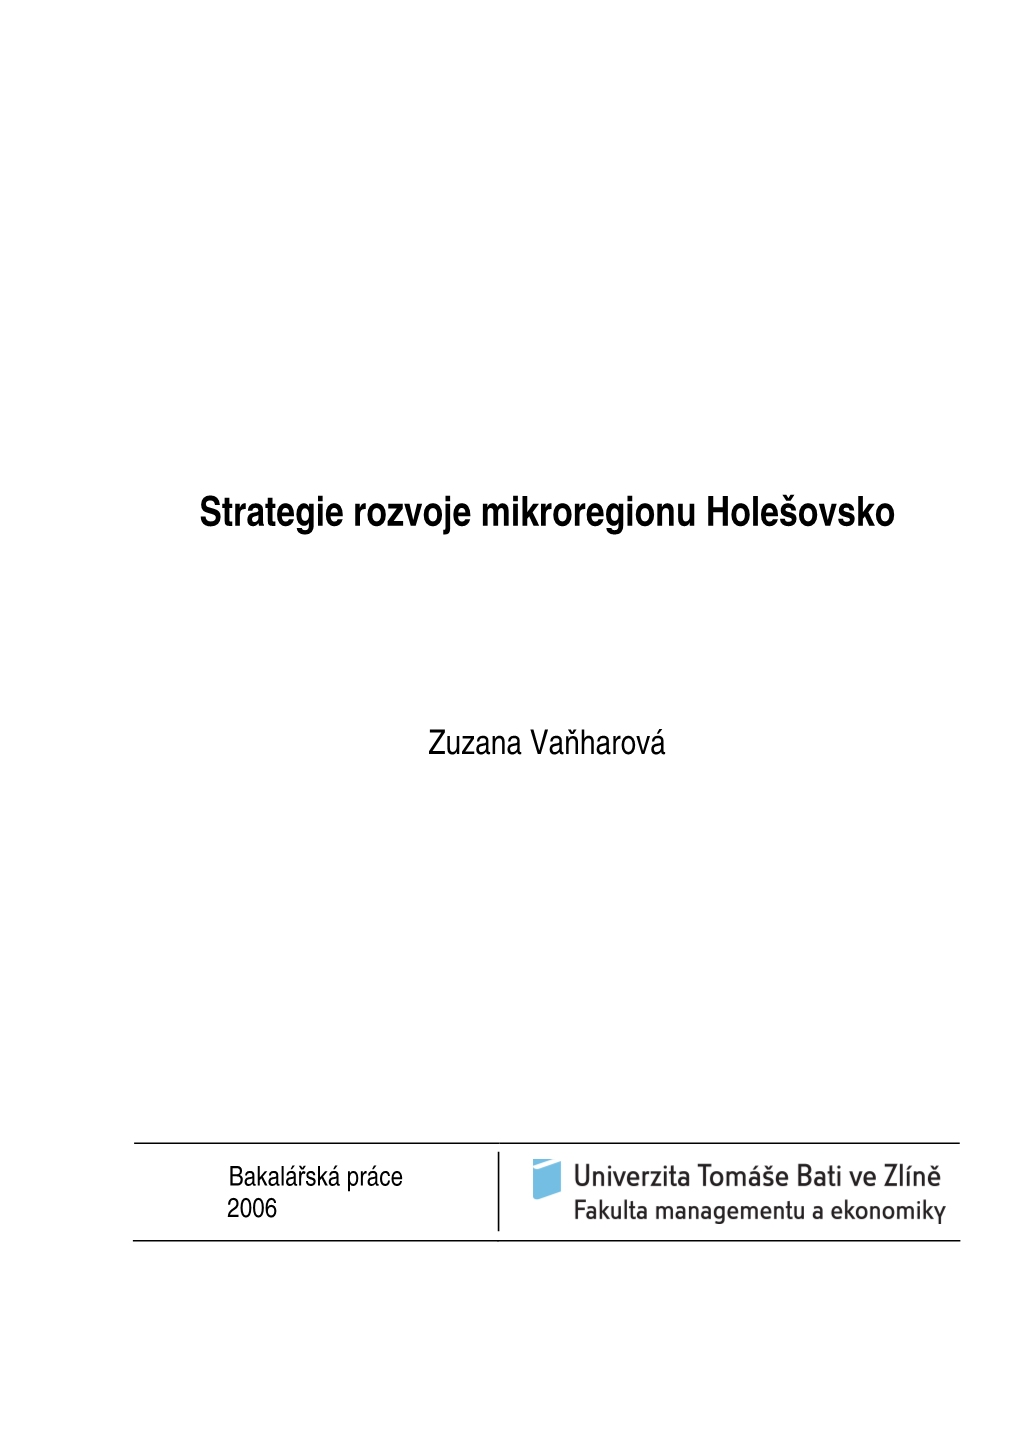 Strategie Rozvoje Mikroregionu Holešovsko